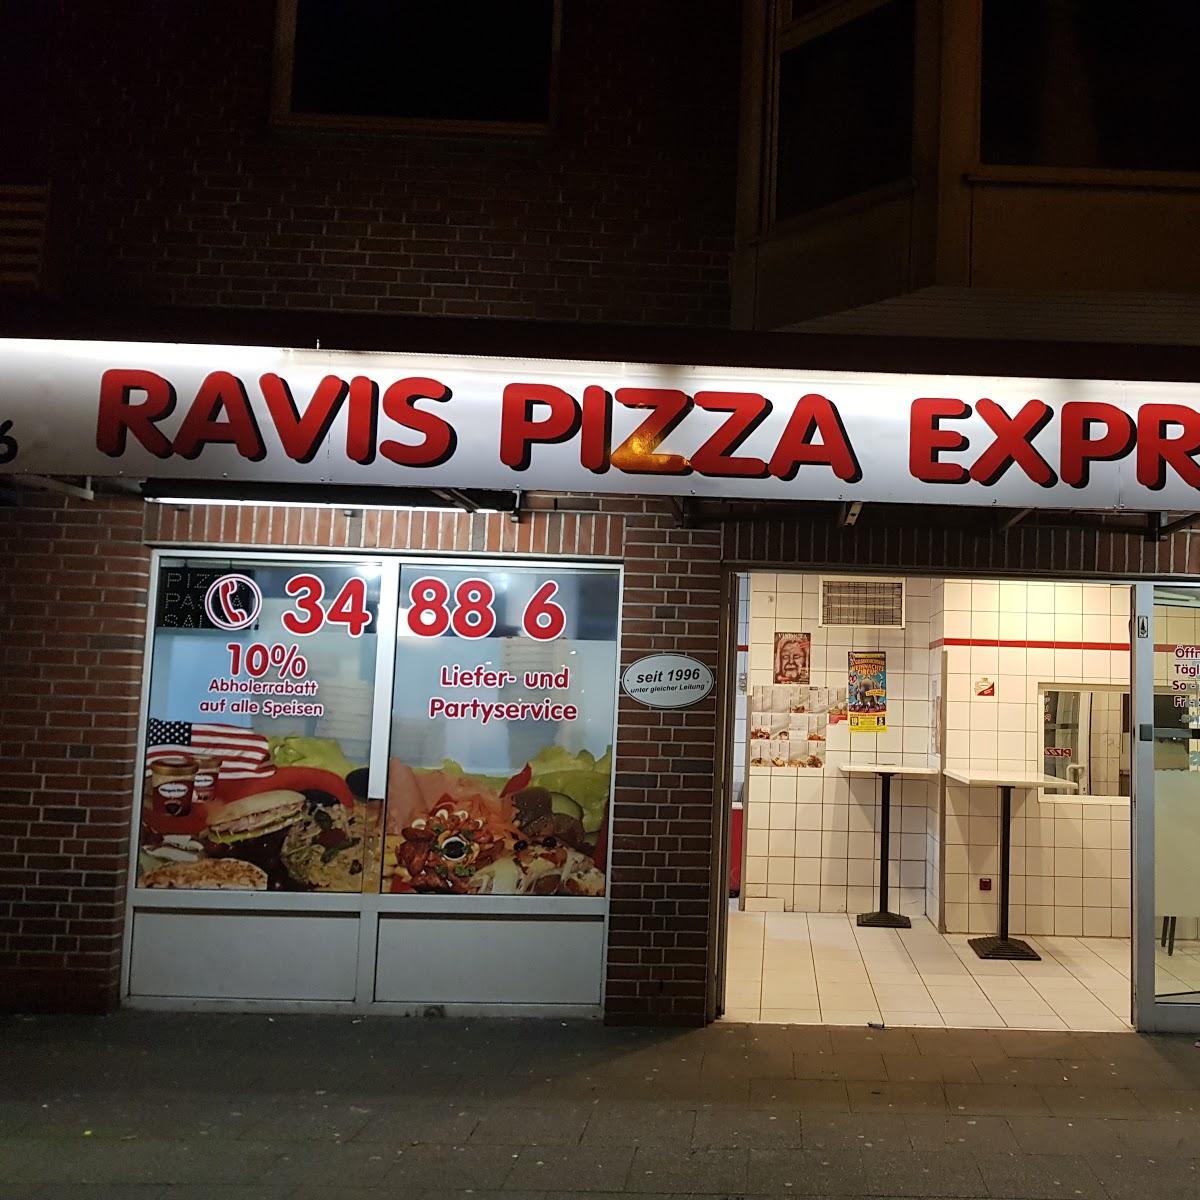 Ravis Pizza Express